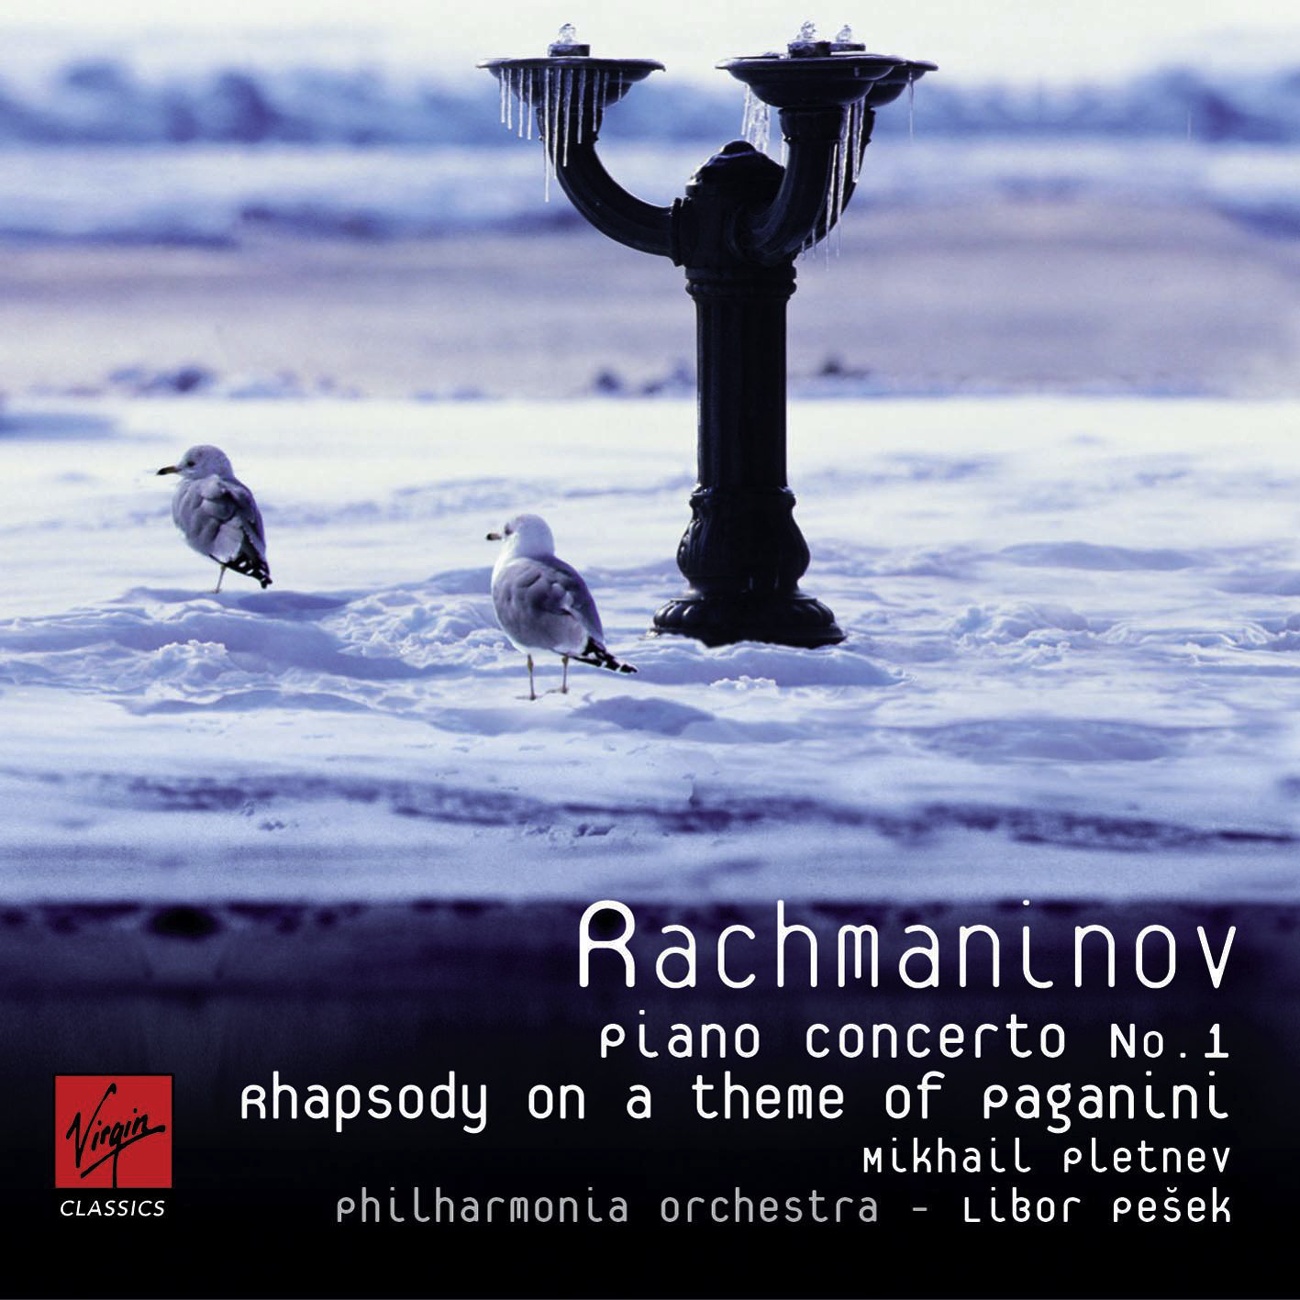 Rhapsody on a Theme of Paganini: Variation XVII